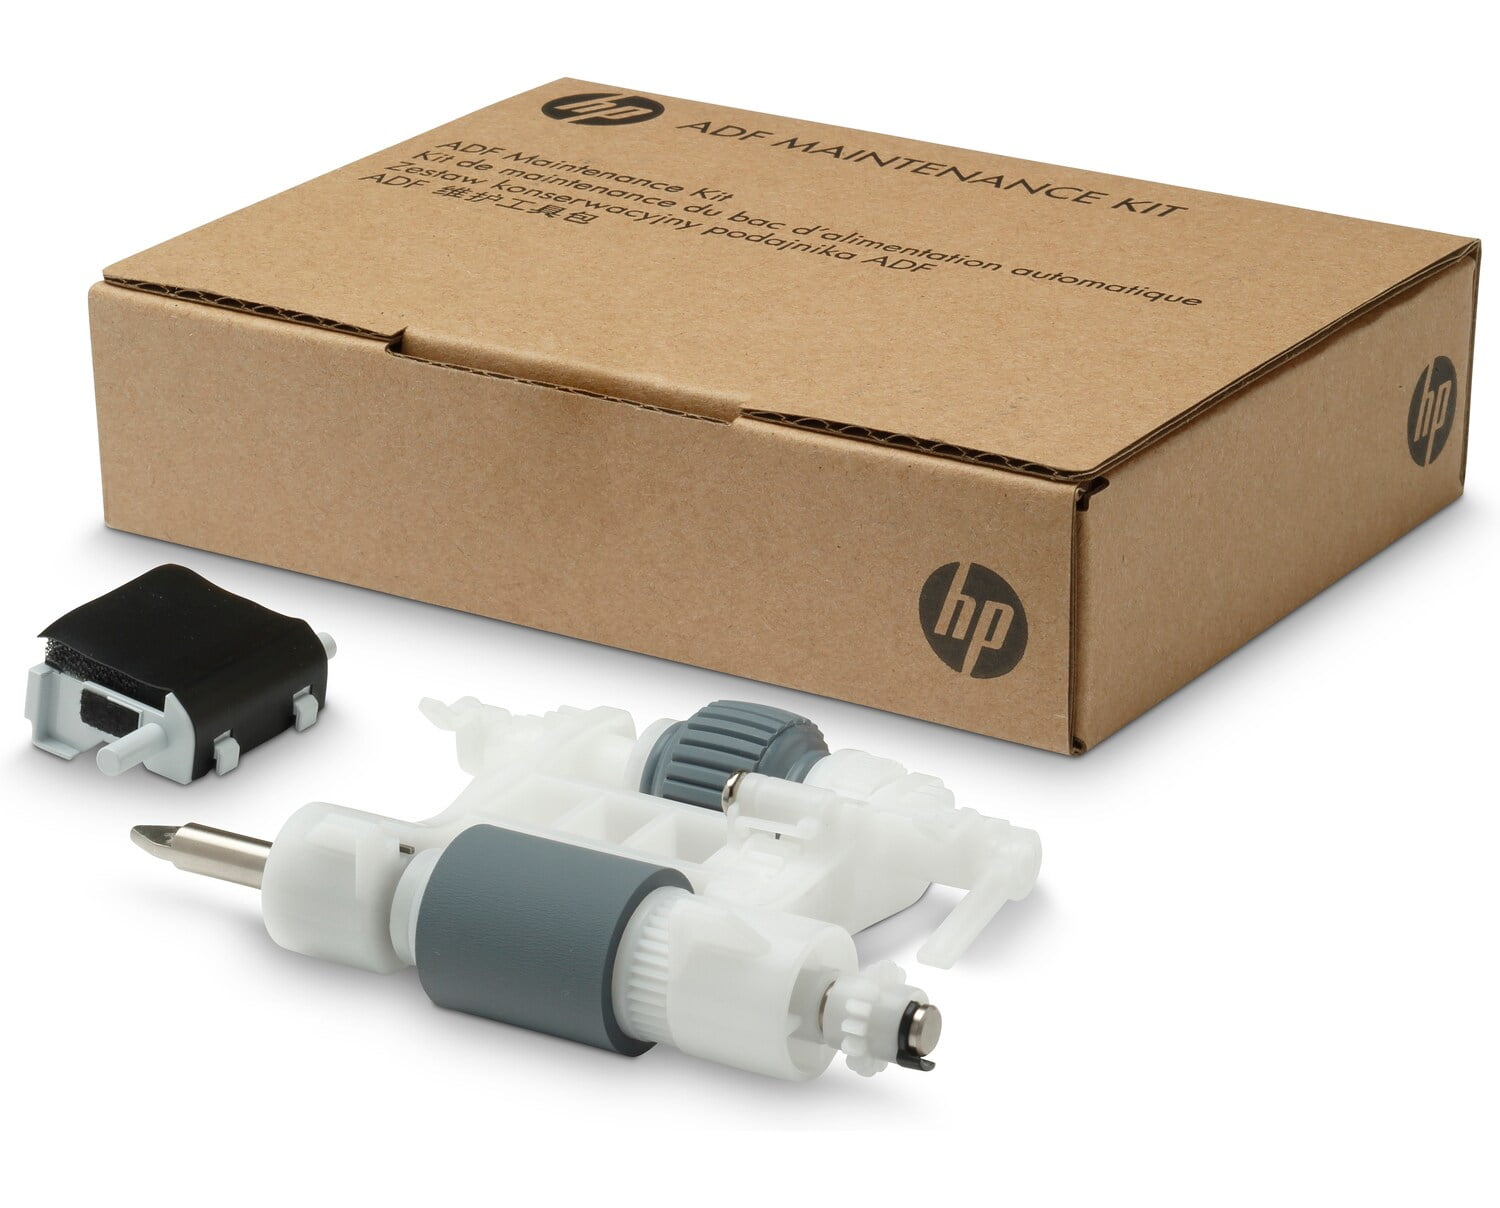 HP LaserJet MFP ADF Maintenance Kit, 60000 pages, Q7842A 